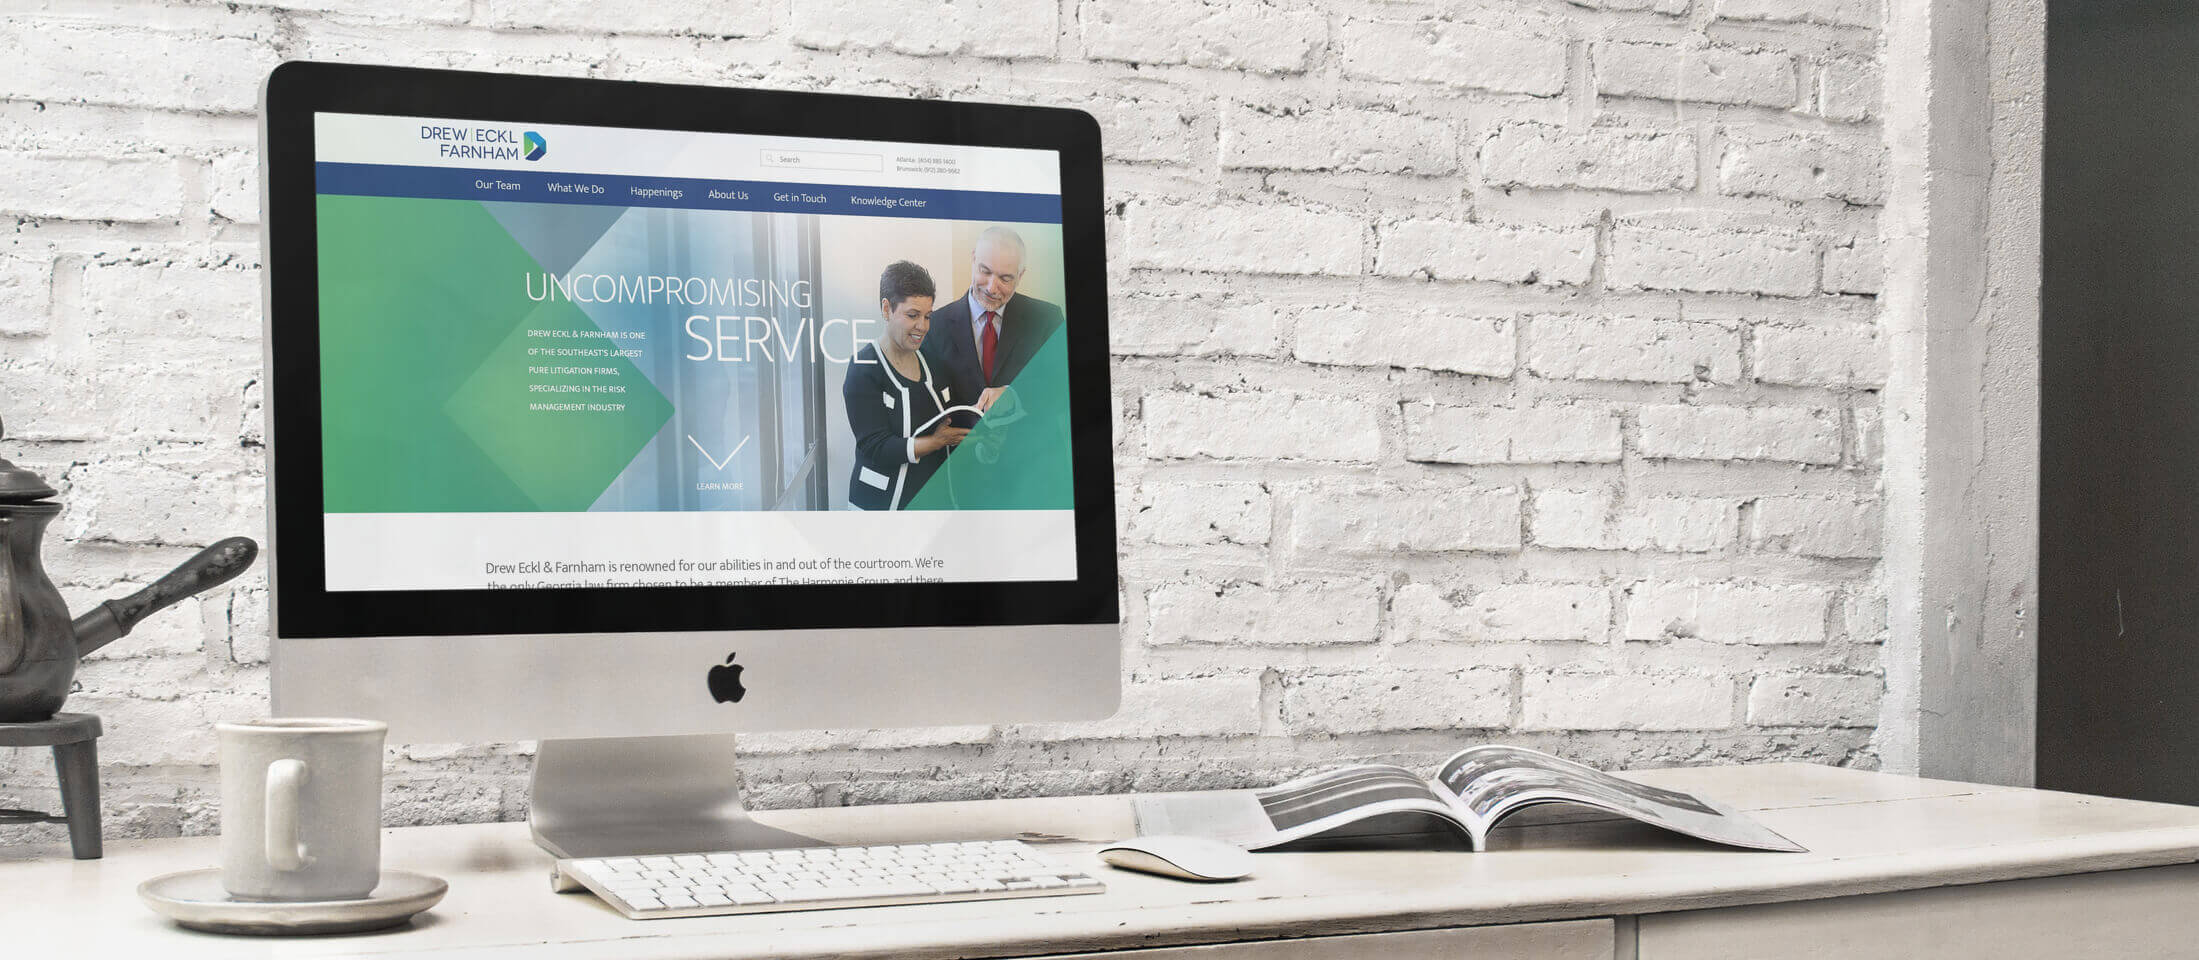 efelle creative Launches responsive professional service website for Atlanta law firm, Drew Eckl & Farnham